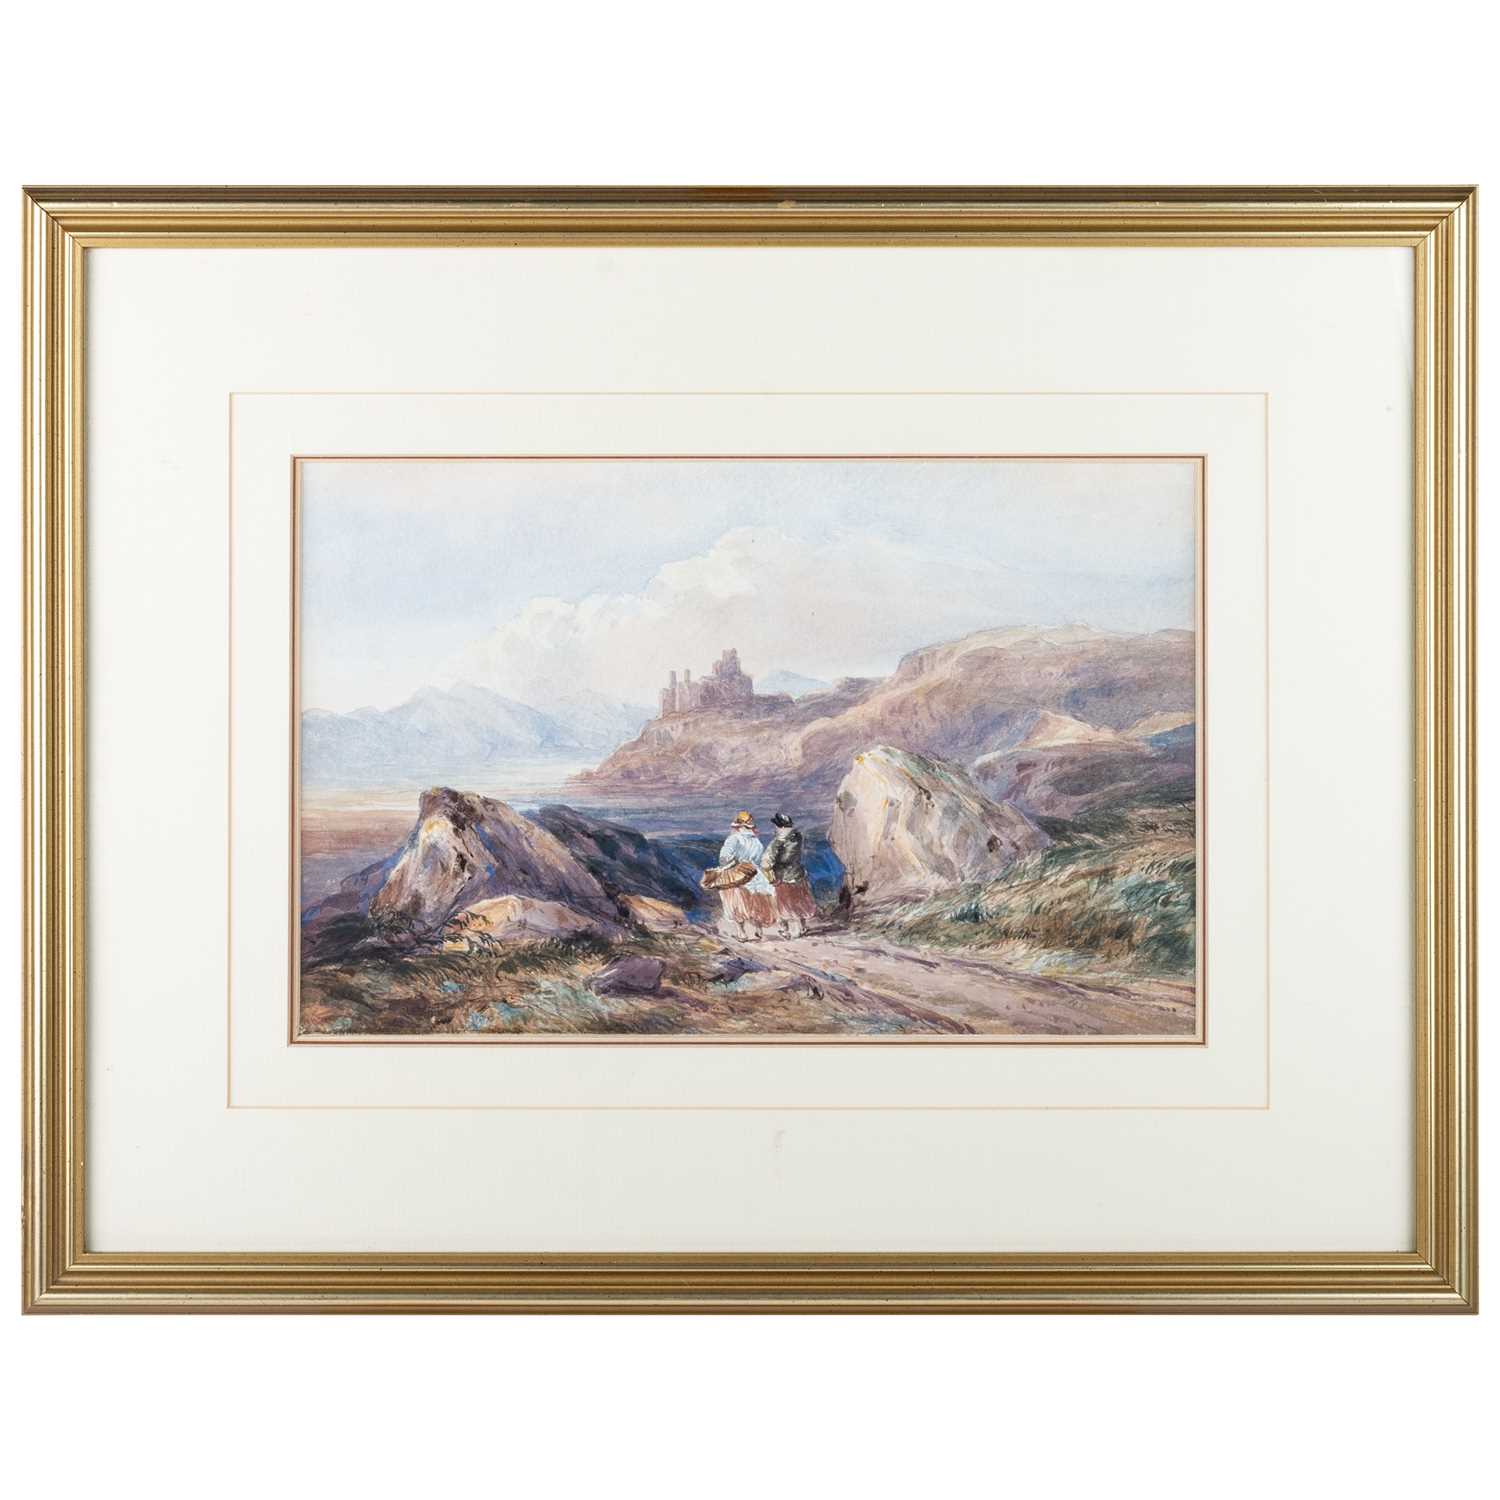 D H McEWAN (1817-1893) AFTER COX SCOTTISH LOCH AND CASTLE LANDSCAPE - Image 2 of 3